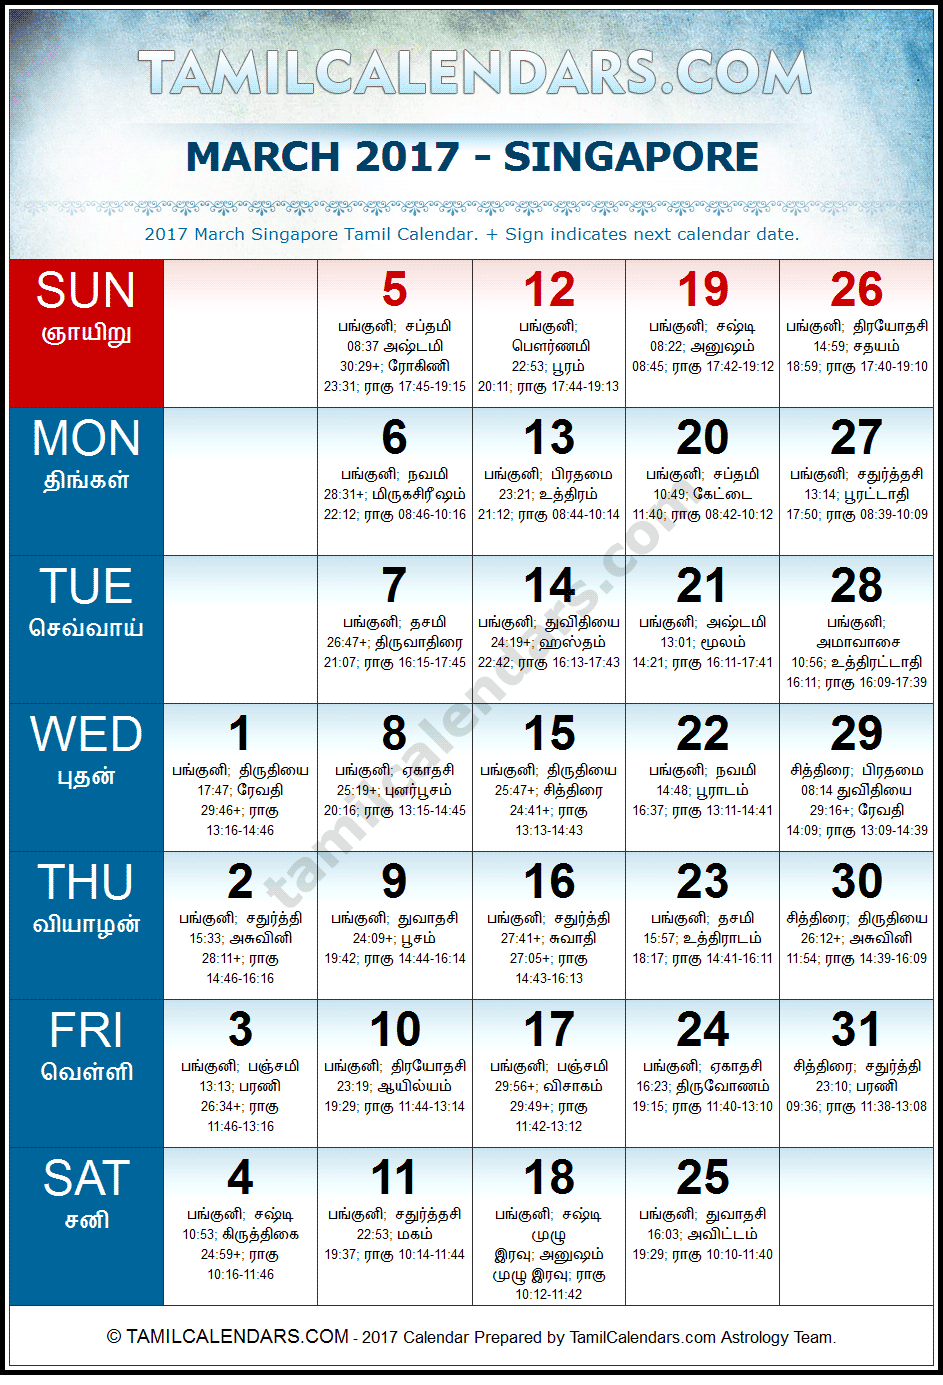 March 2017 Tamil Calendar for Singapore